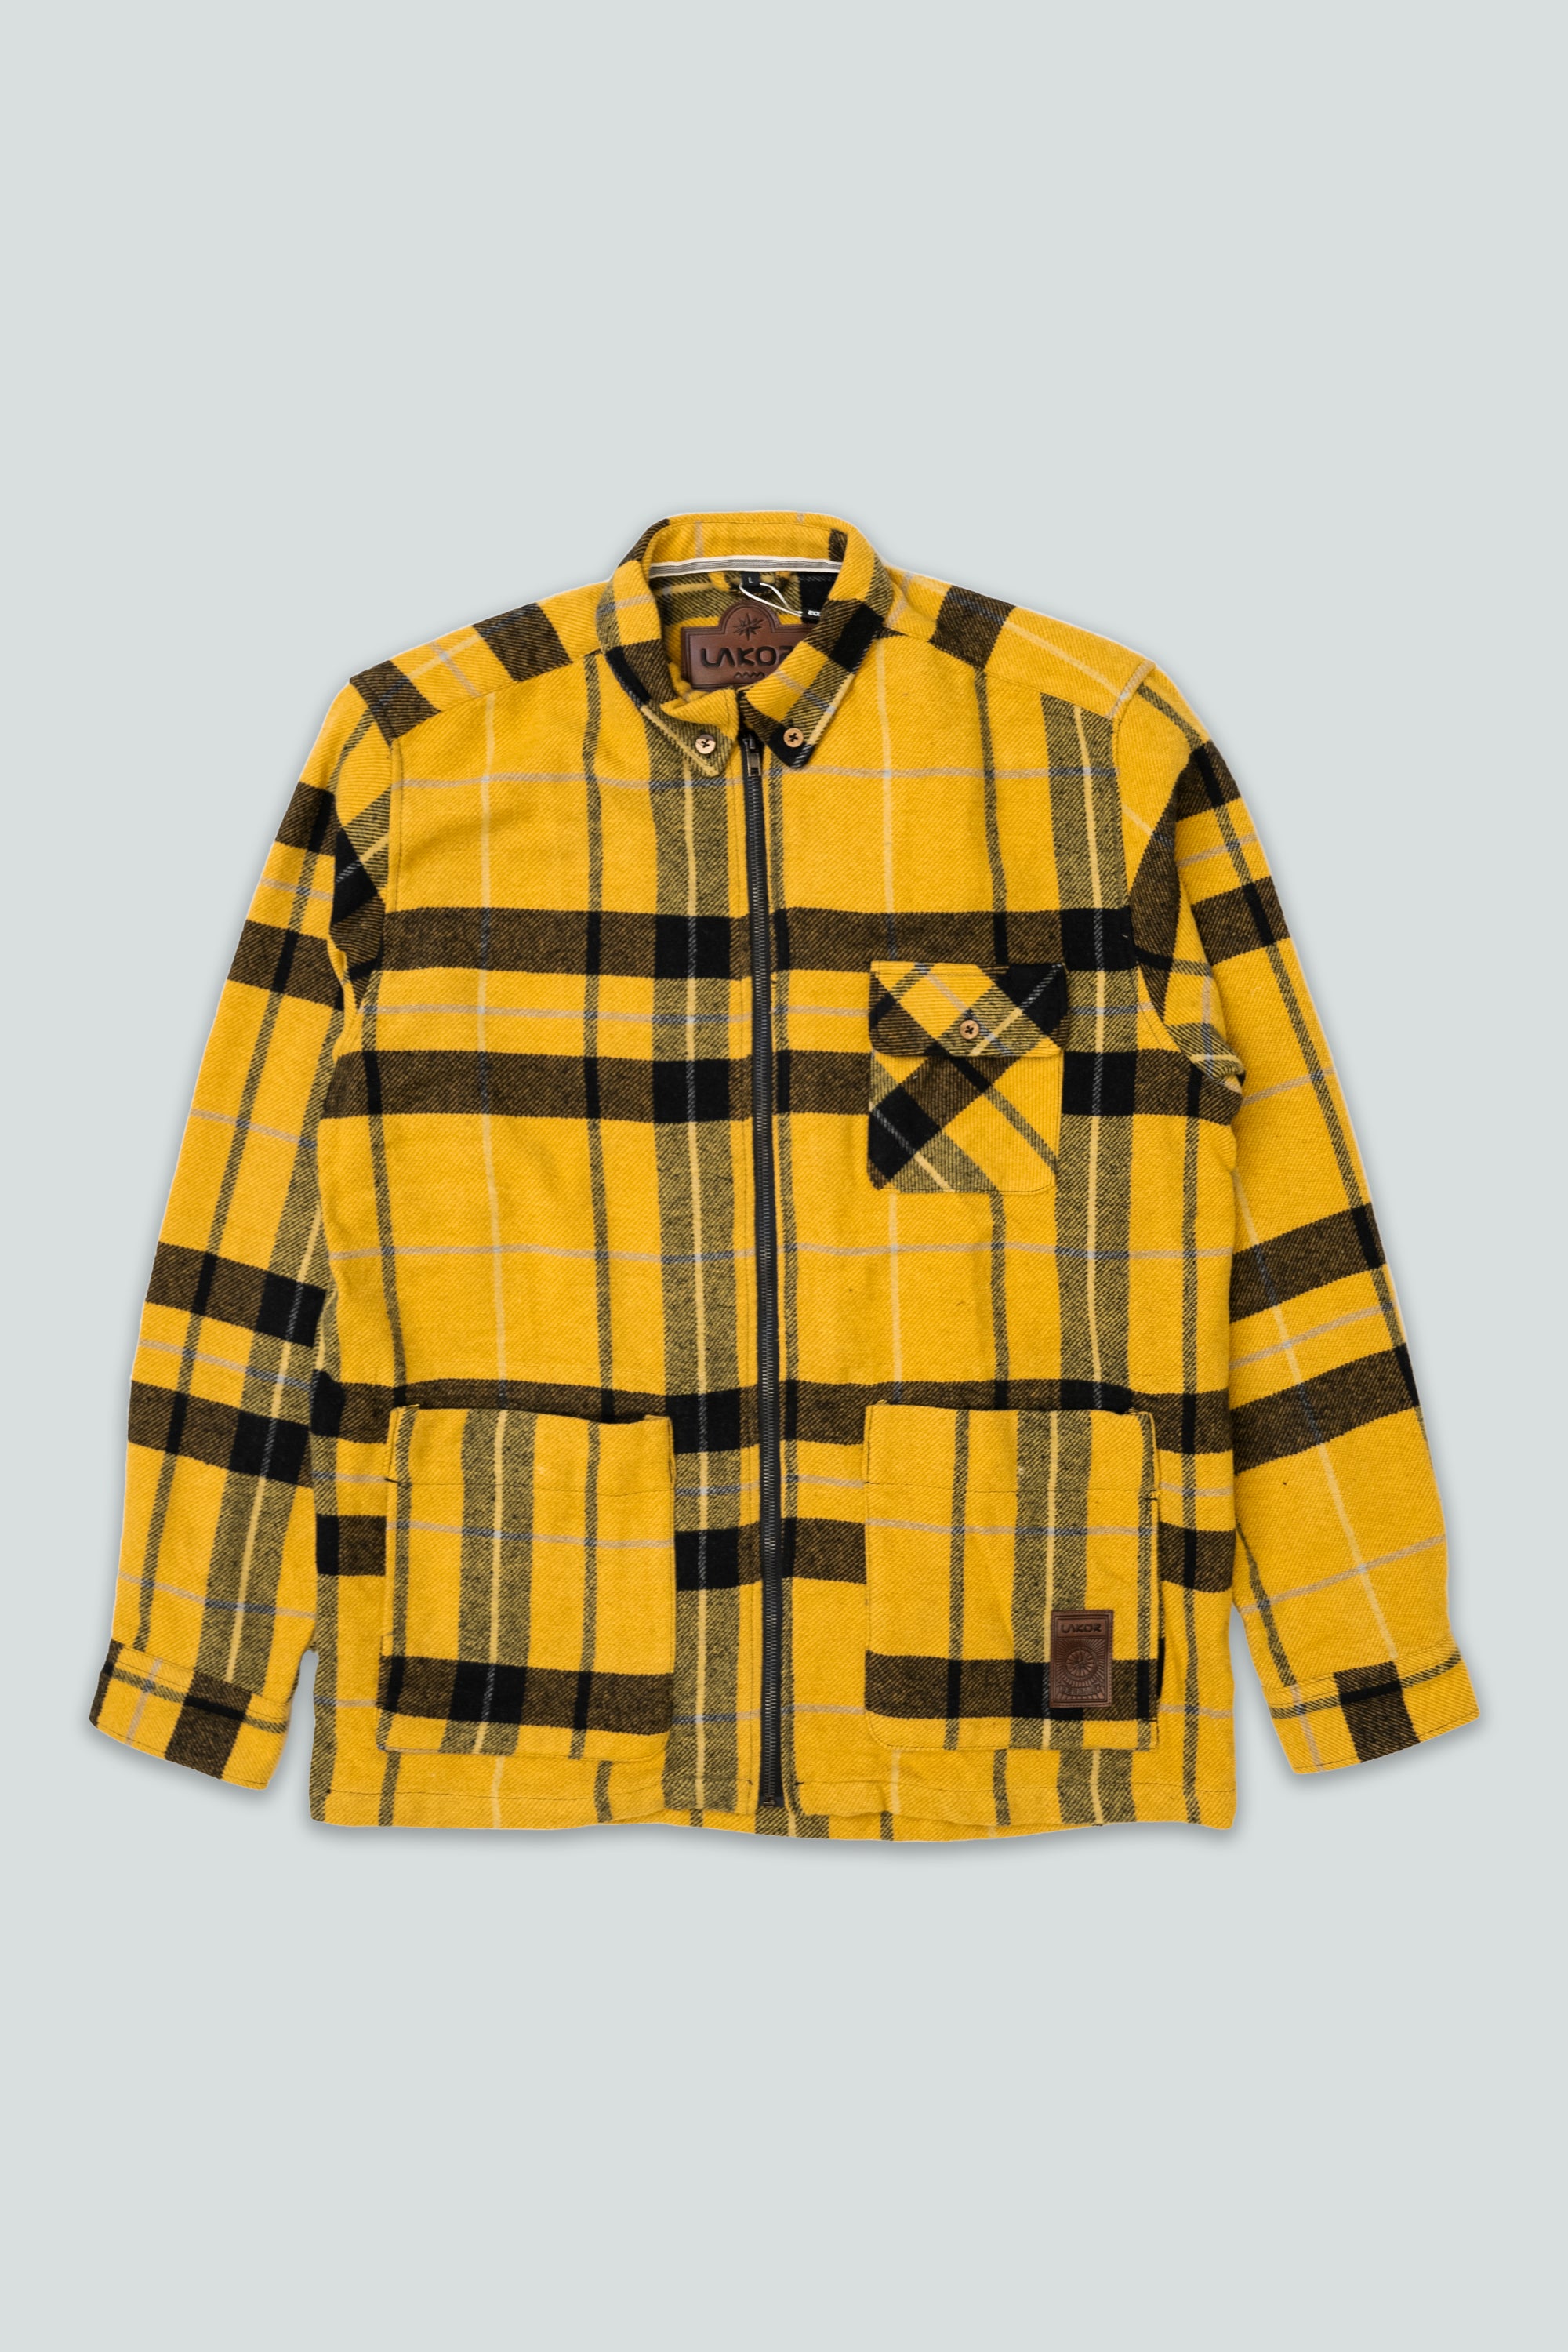 Beaver Shirt Jacket (Yellow)